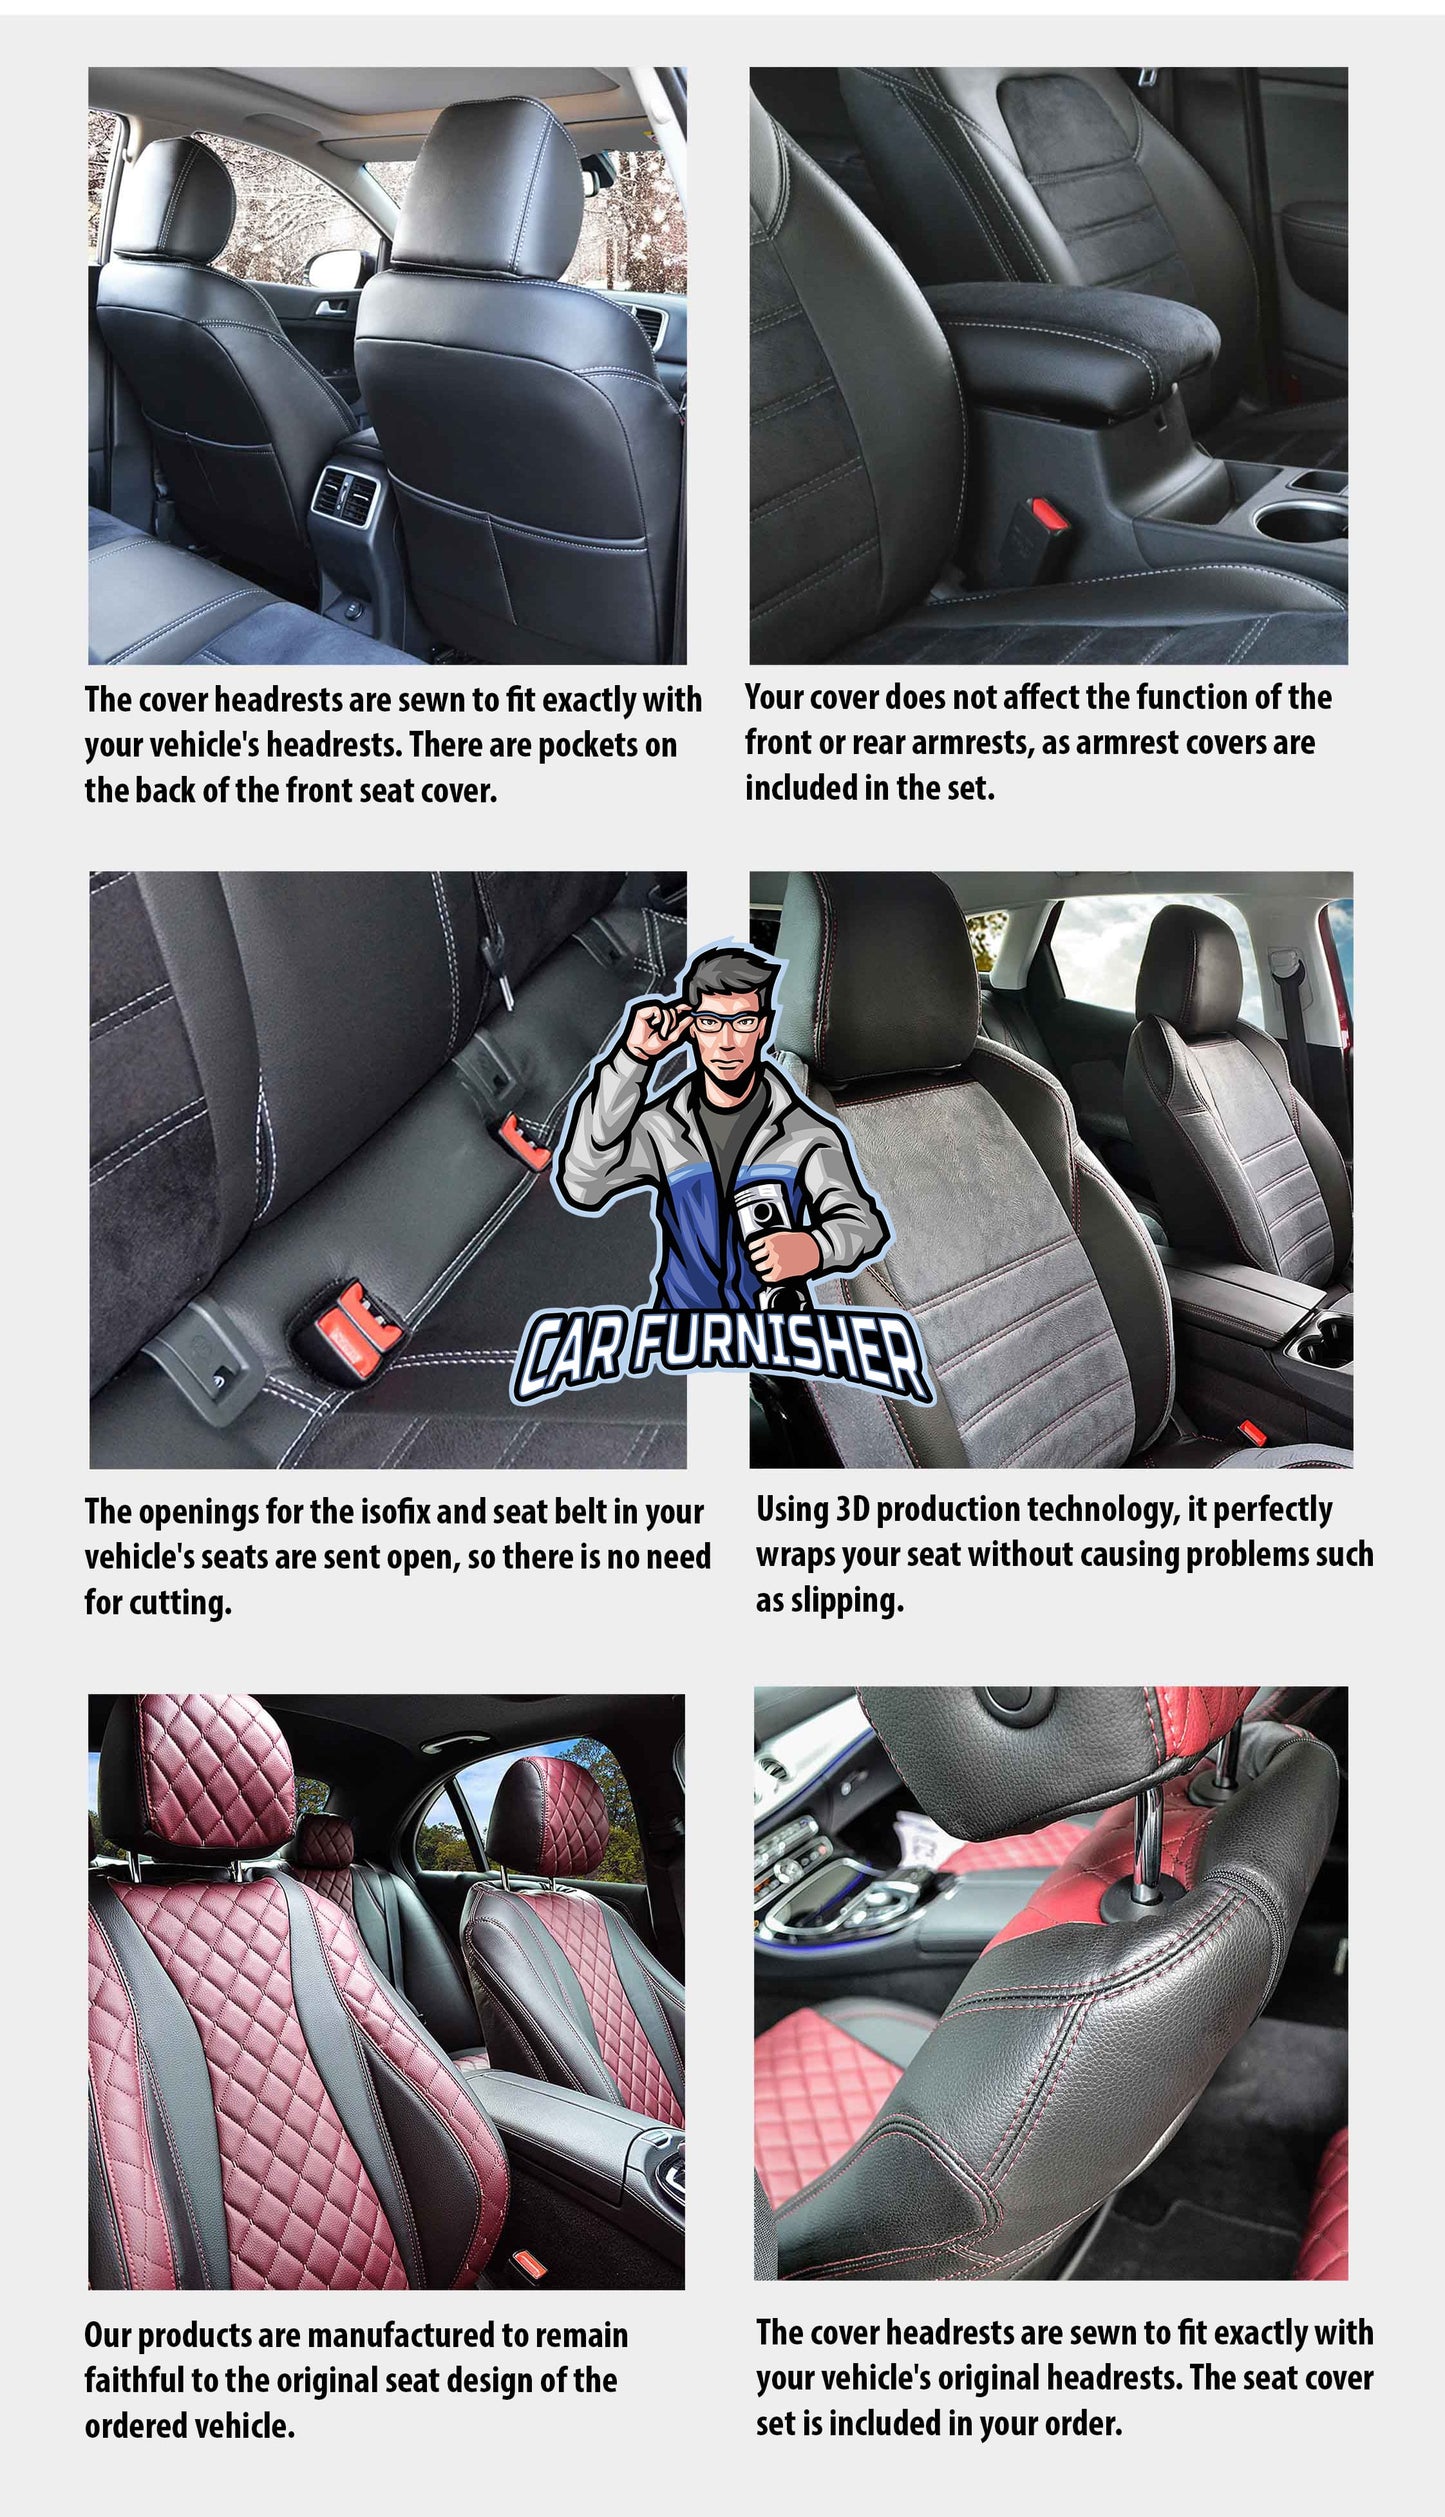 Daewoo Tacuma Seat Covers Istanbul Leather Design Beige Leather